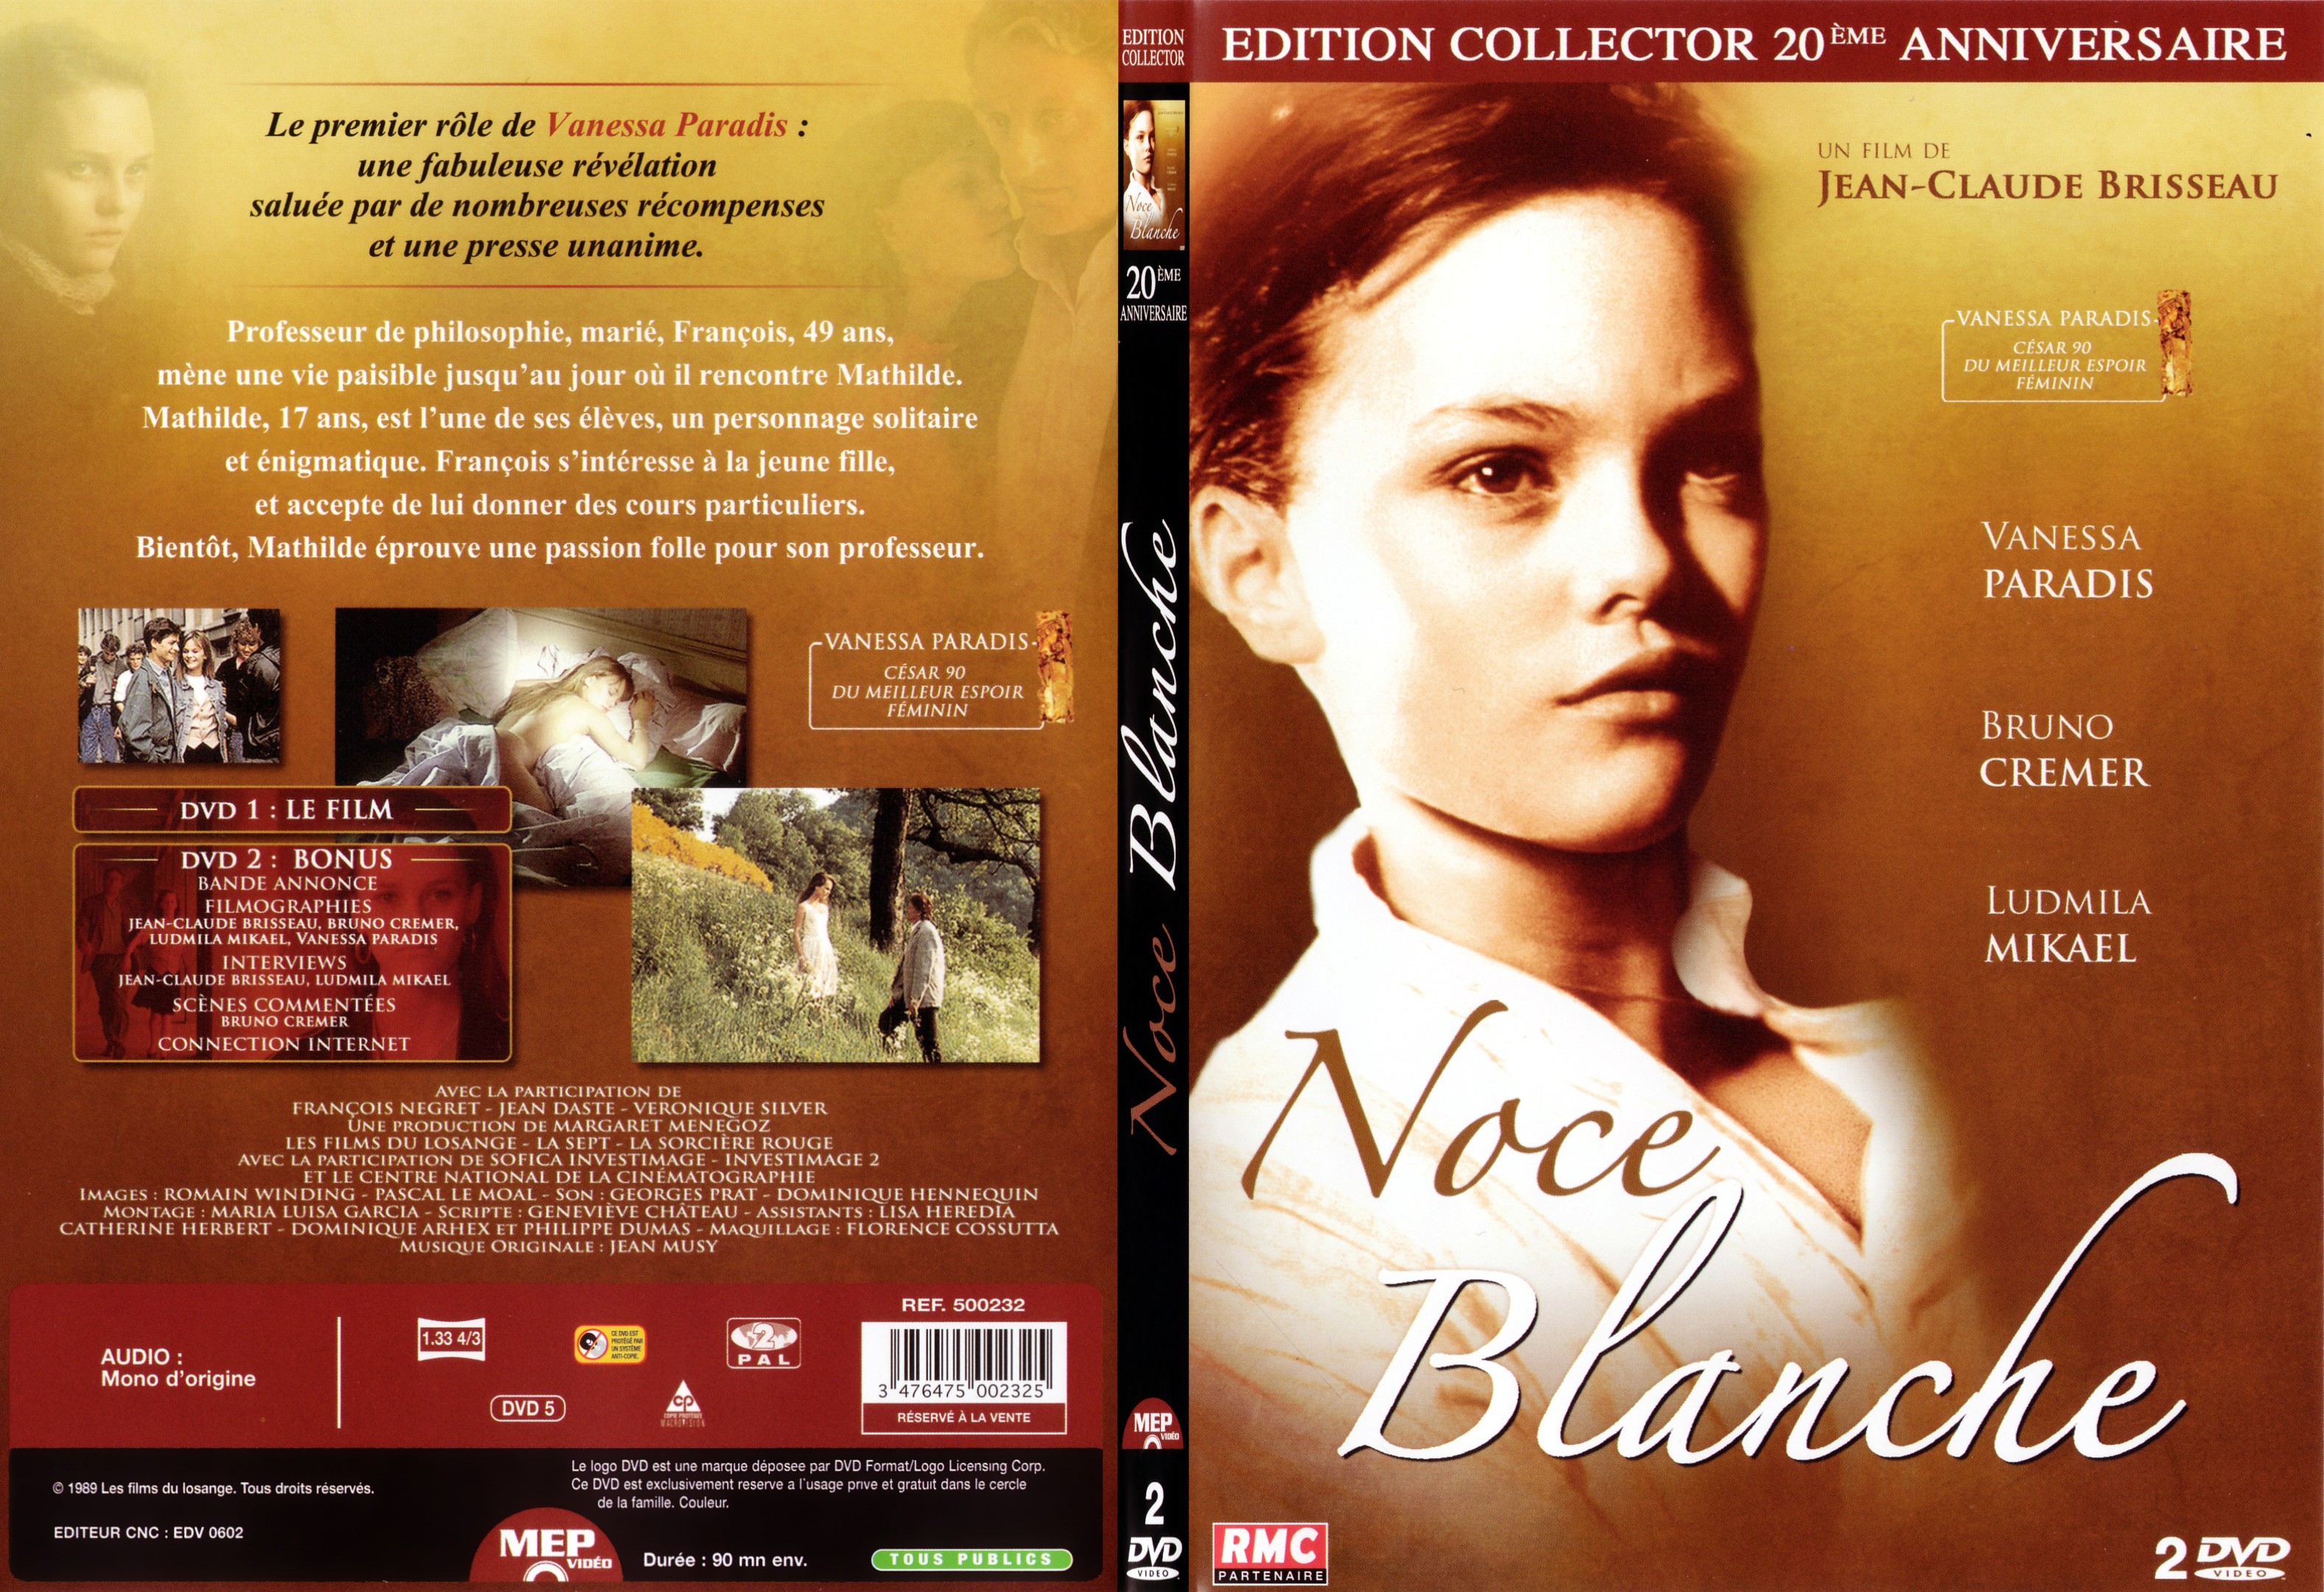 Jaquette DVD Noce blanche - SLIM v2